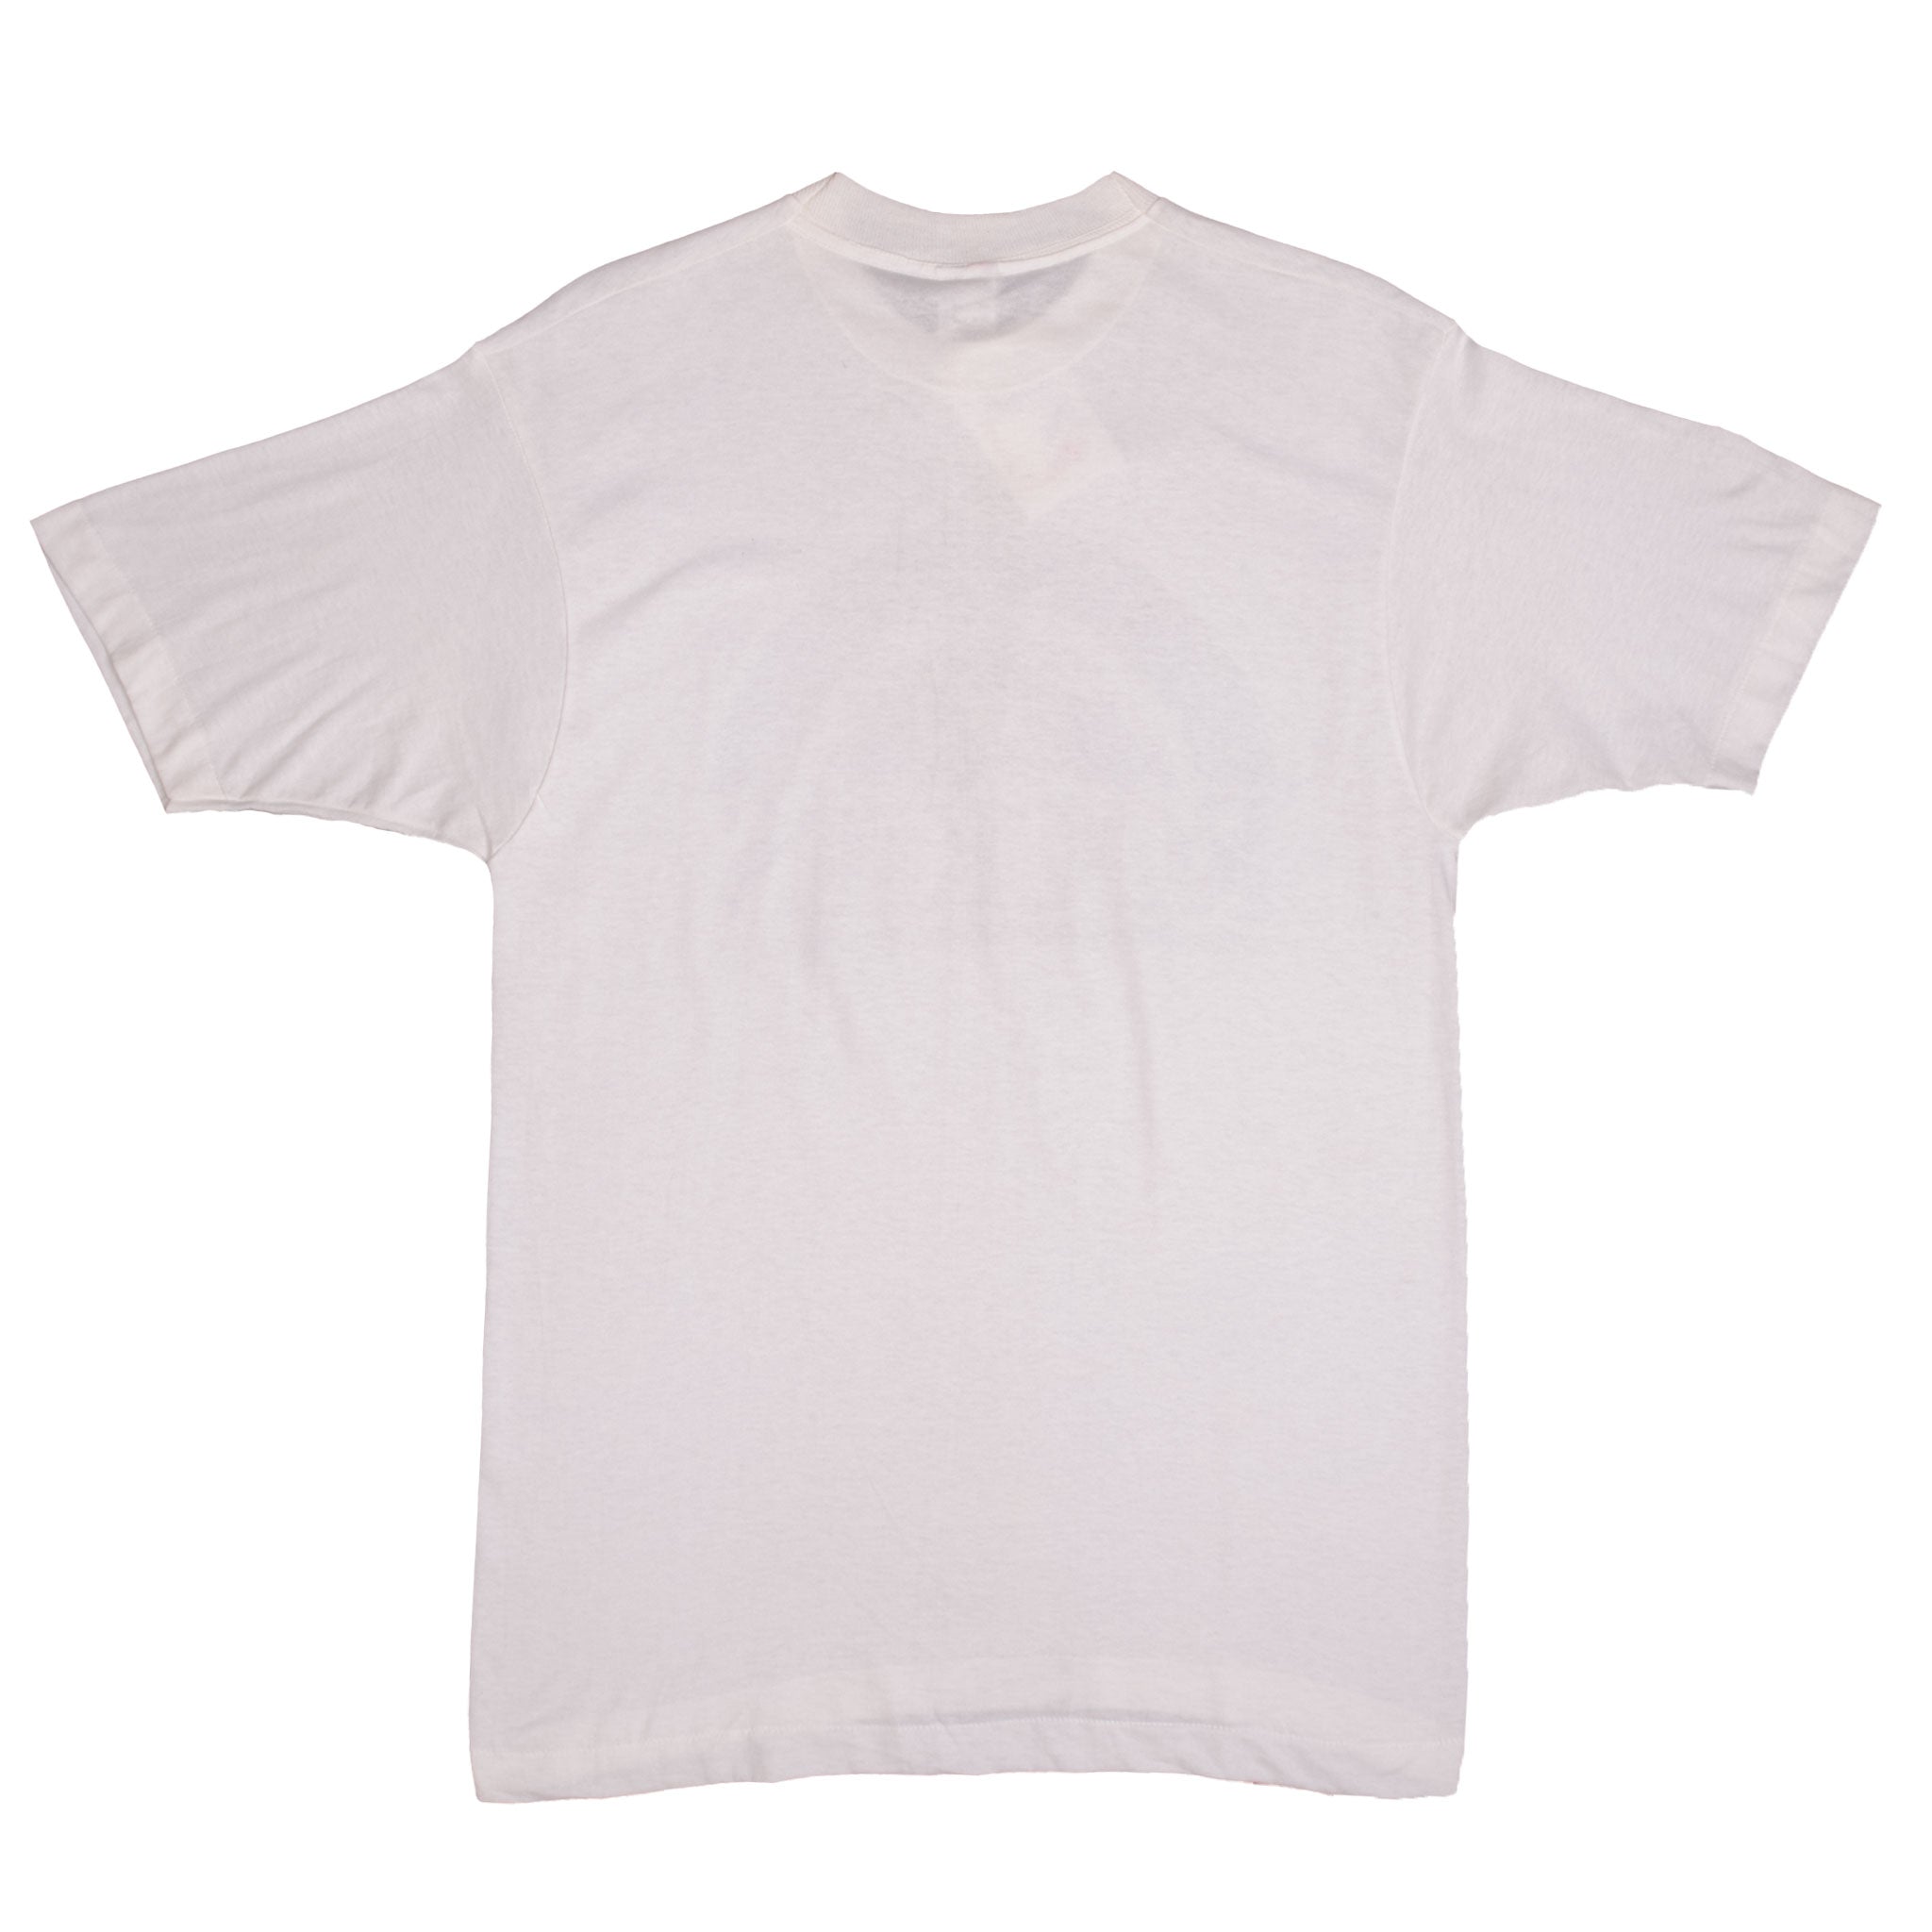 Colorado Rockies Baseball Flag Tee Shirt Youth XL (12-14) / White